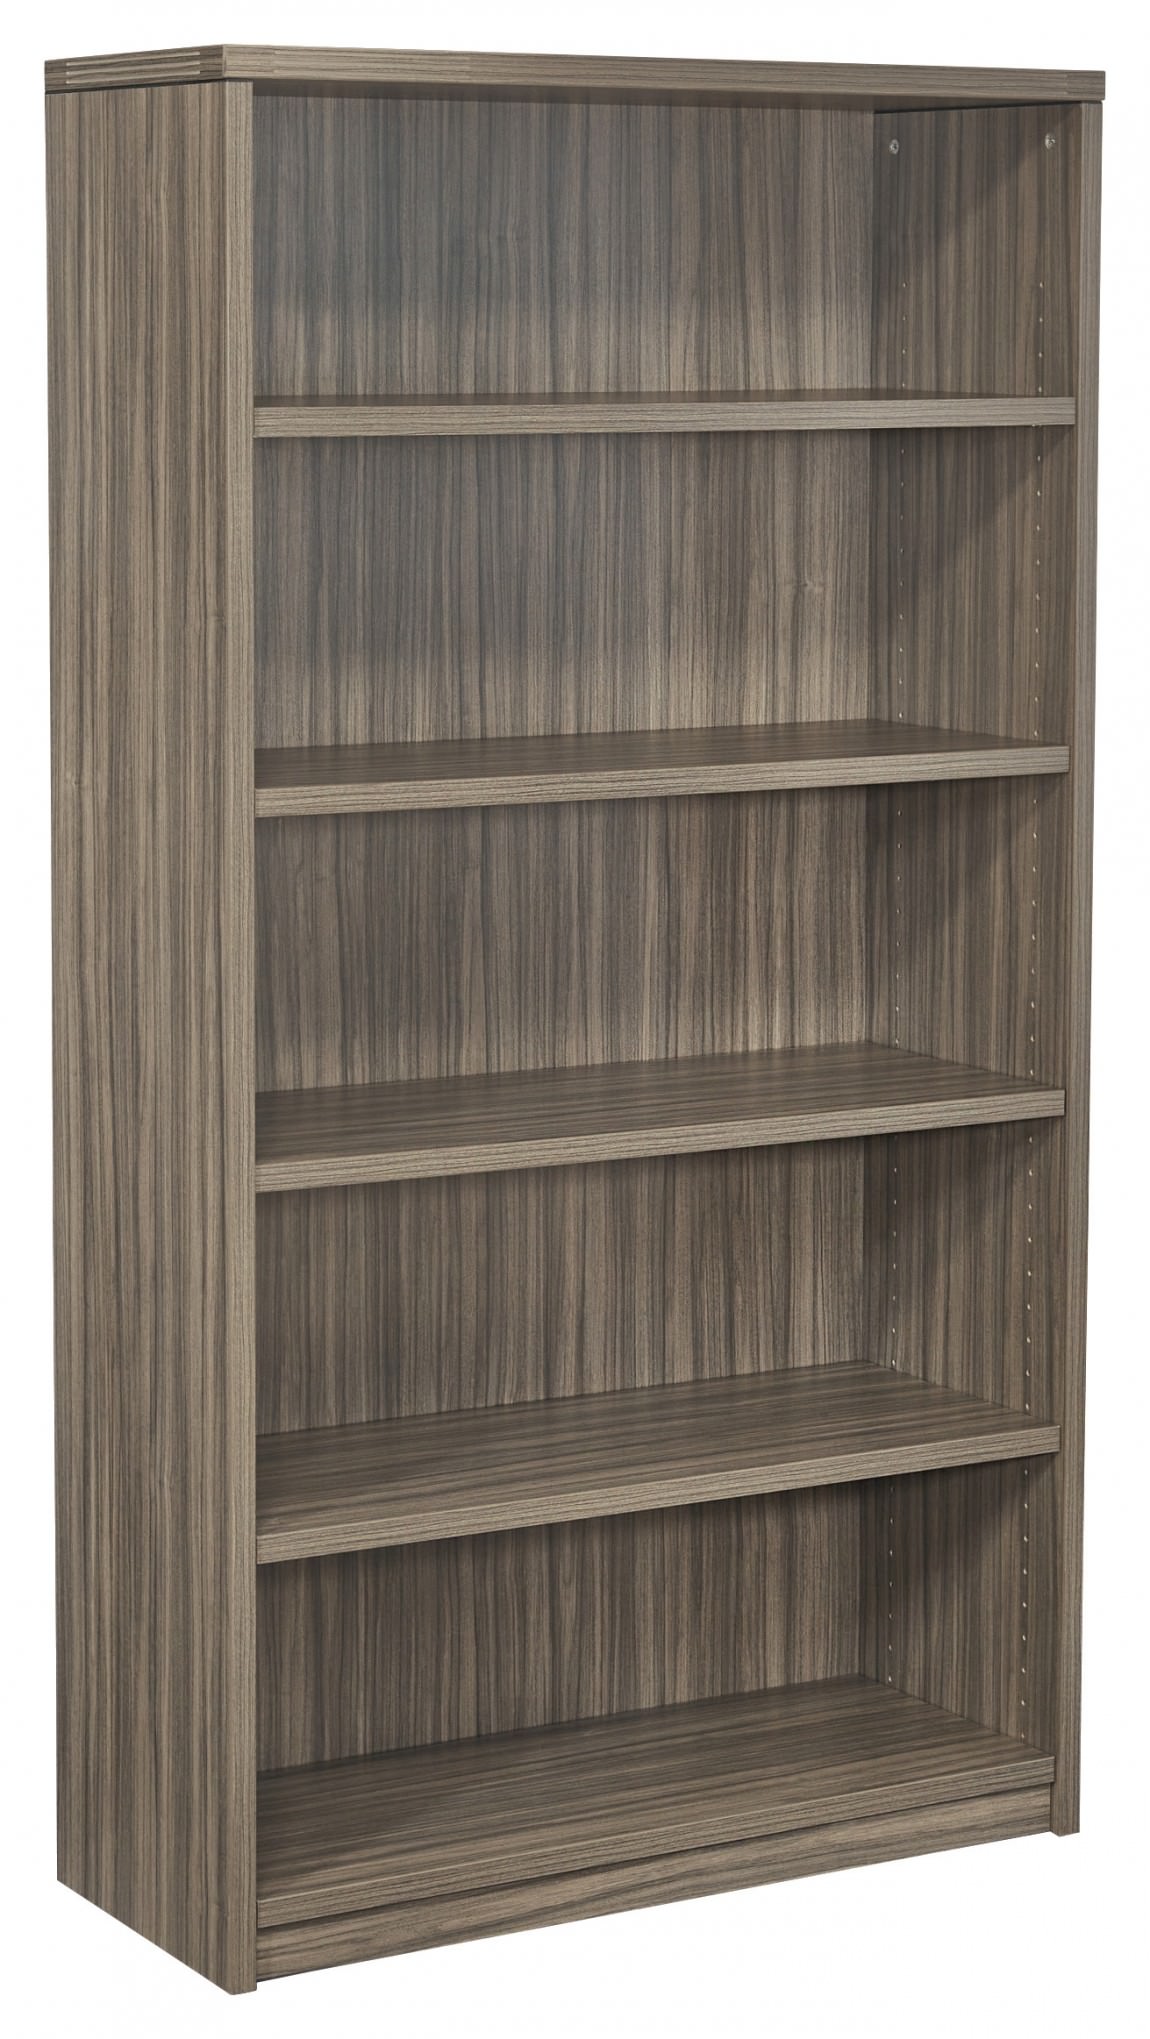 https://madisonliquidators.com/images/p/1150/19476-3-shelf-bookcase-42-tall-2.jpg